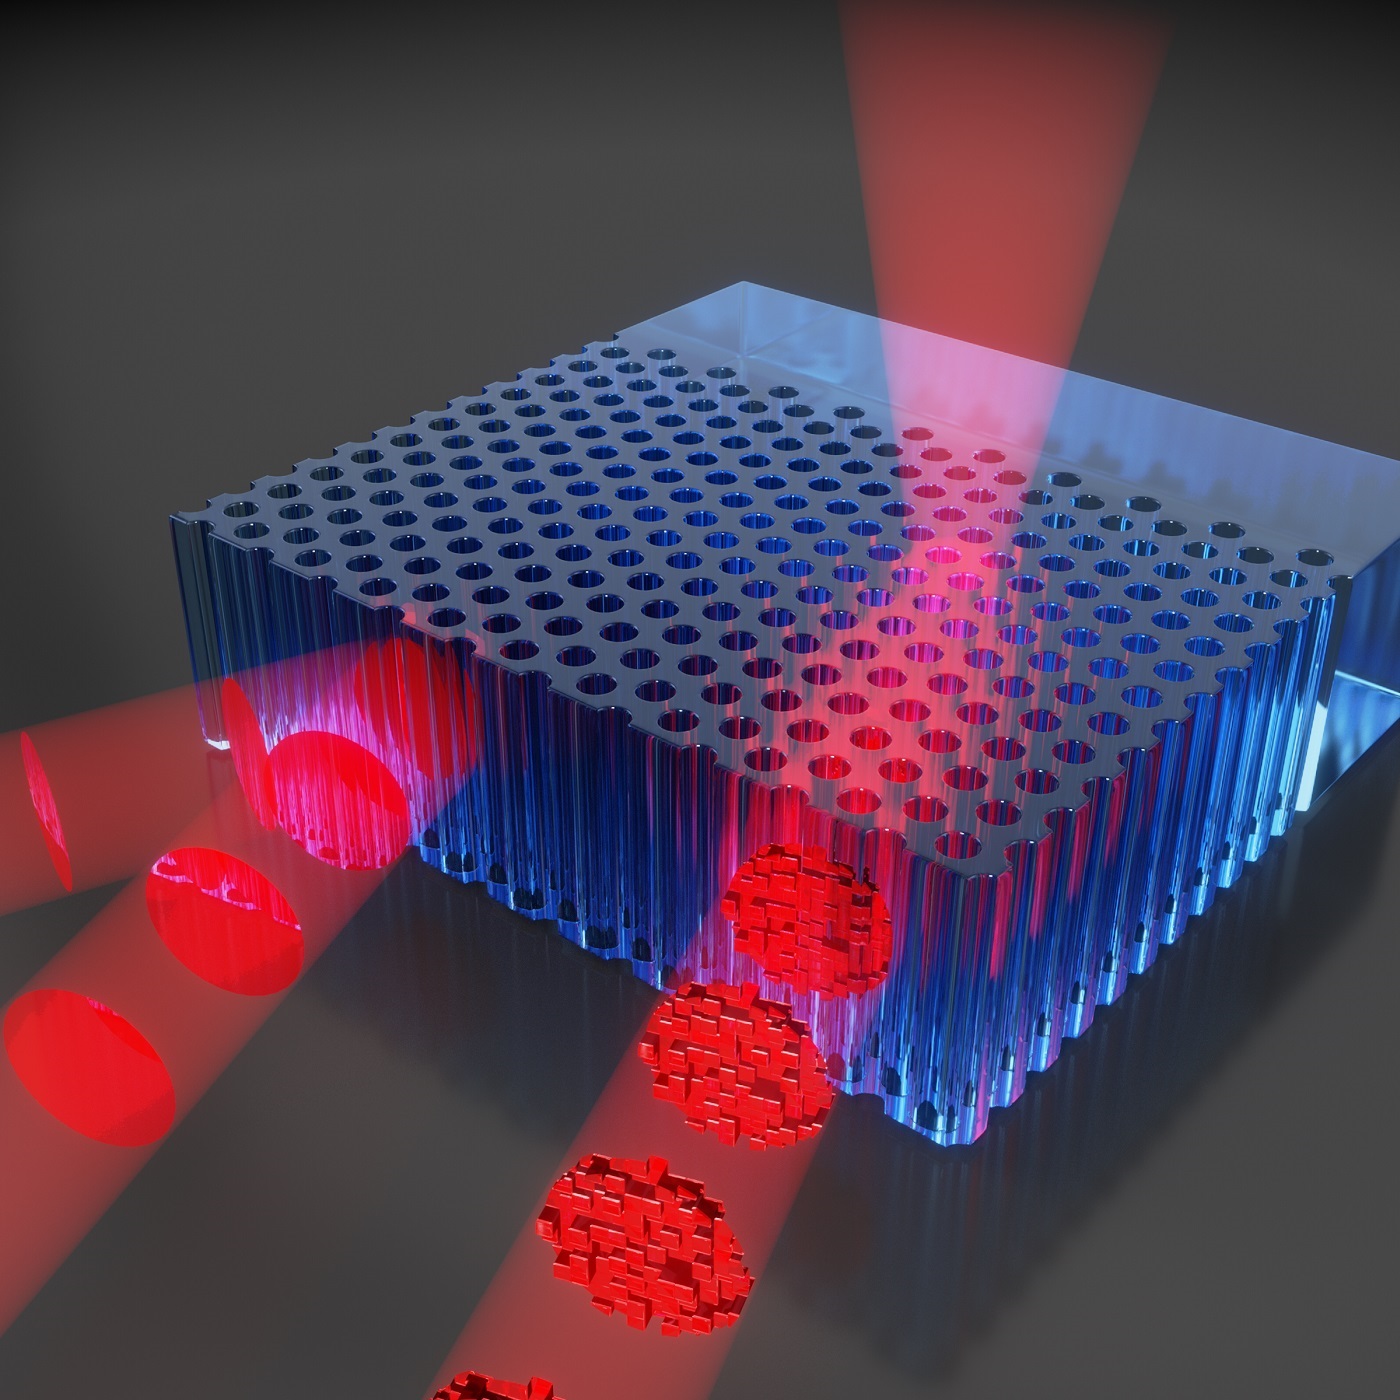 Light propagation inside a photonic crystal is forbidden by a propagation gap.